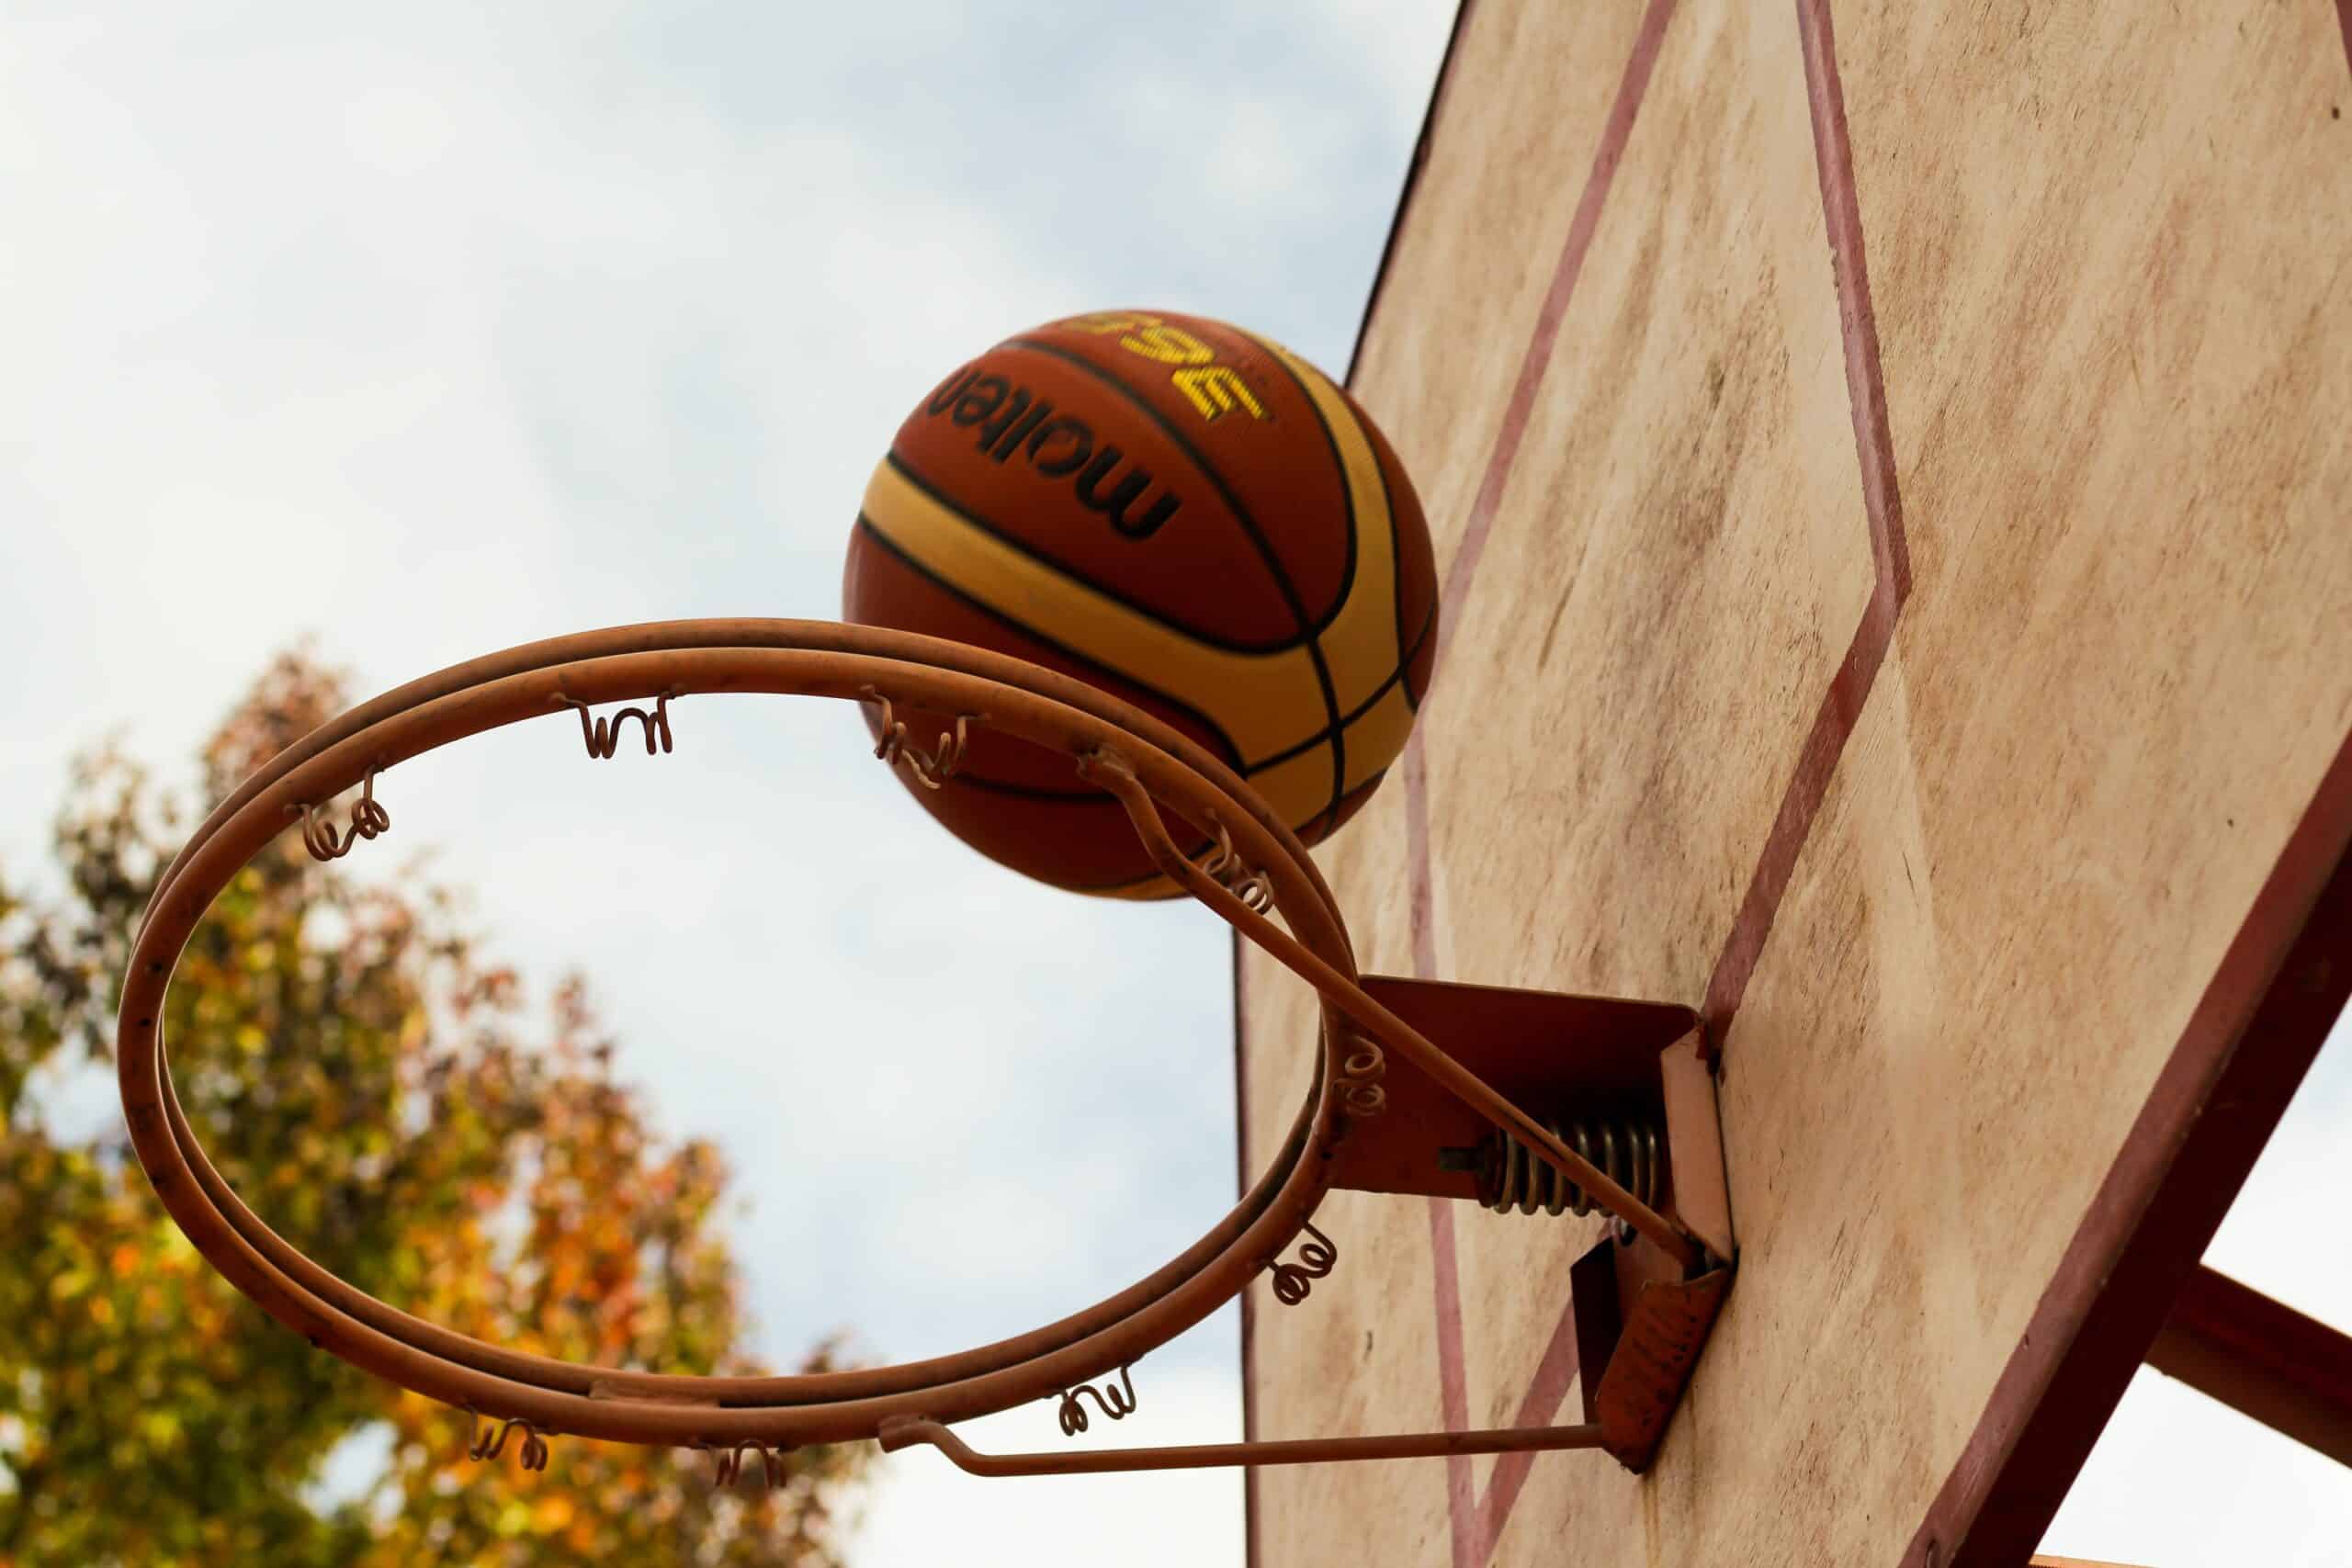 basketball going into a hoop